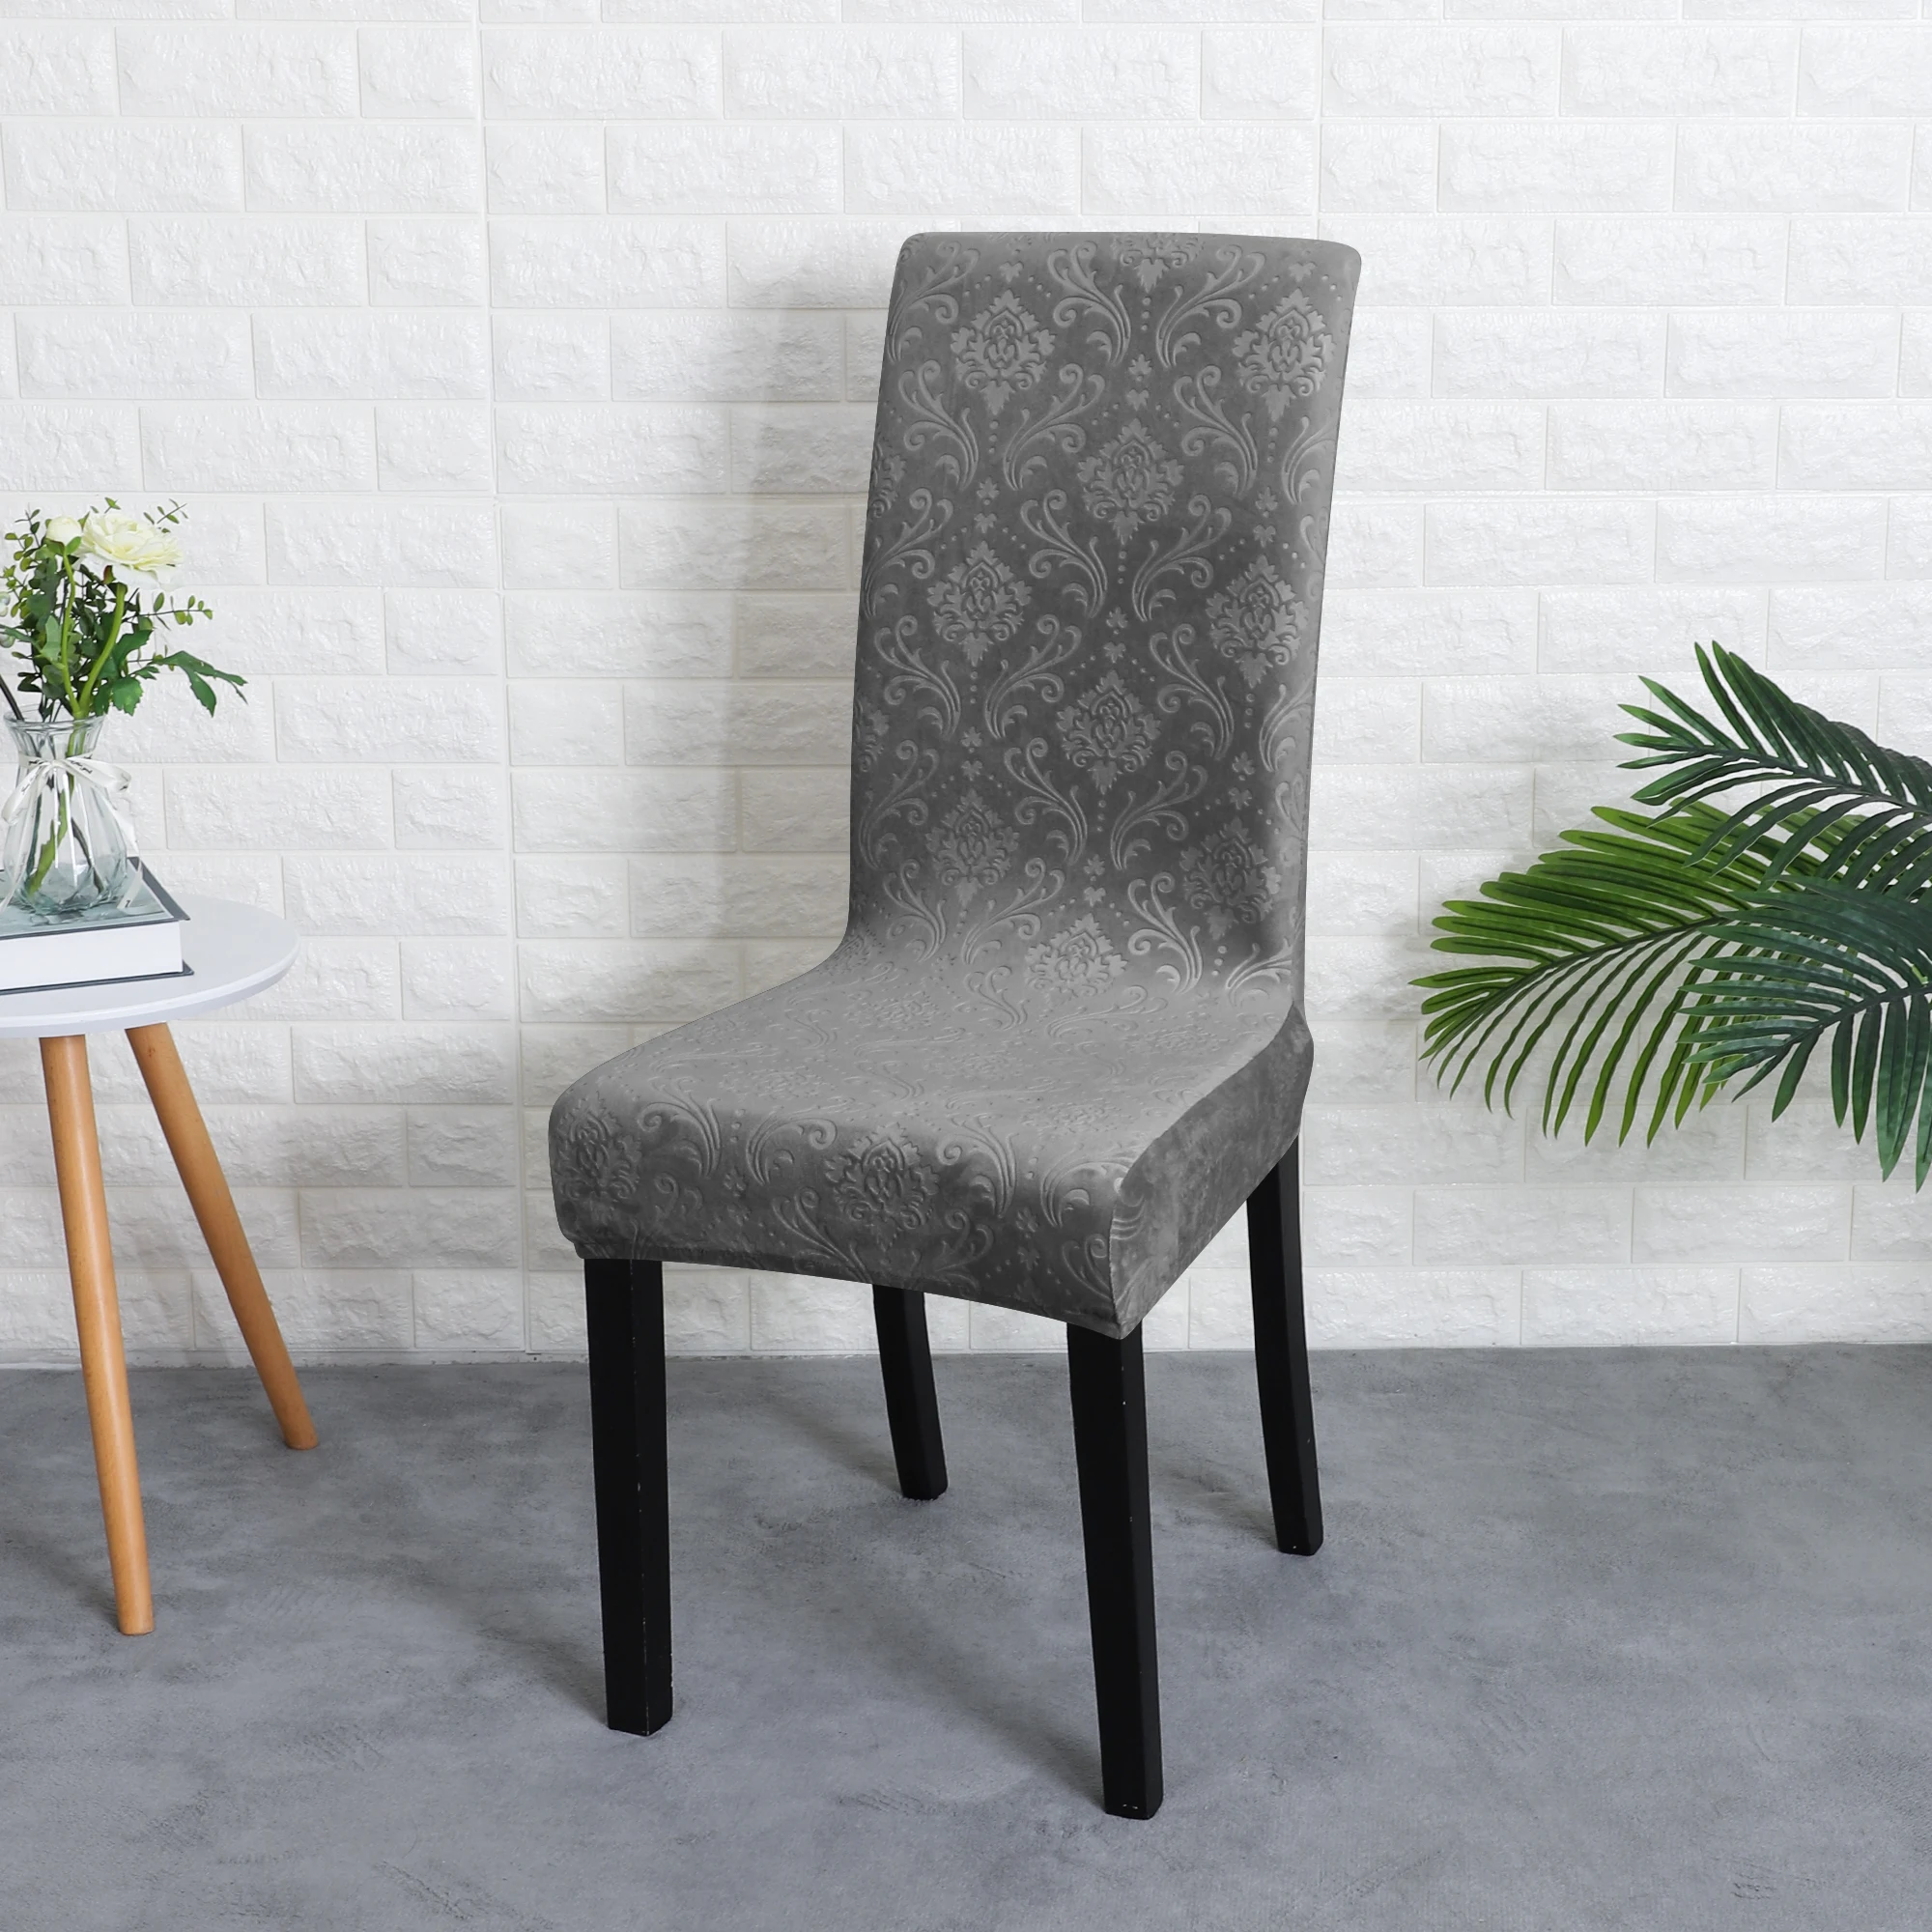 Embossed Velvet Fabric Chair Cover For Dining Room Stretch Soft Stretch Cover For Dining Chairs Seat Case For Home Winter Decor